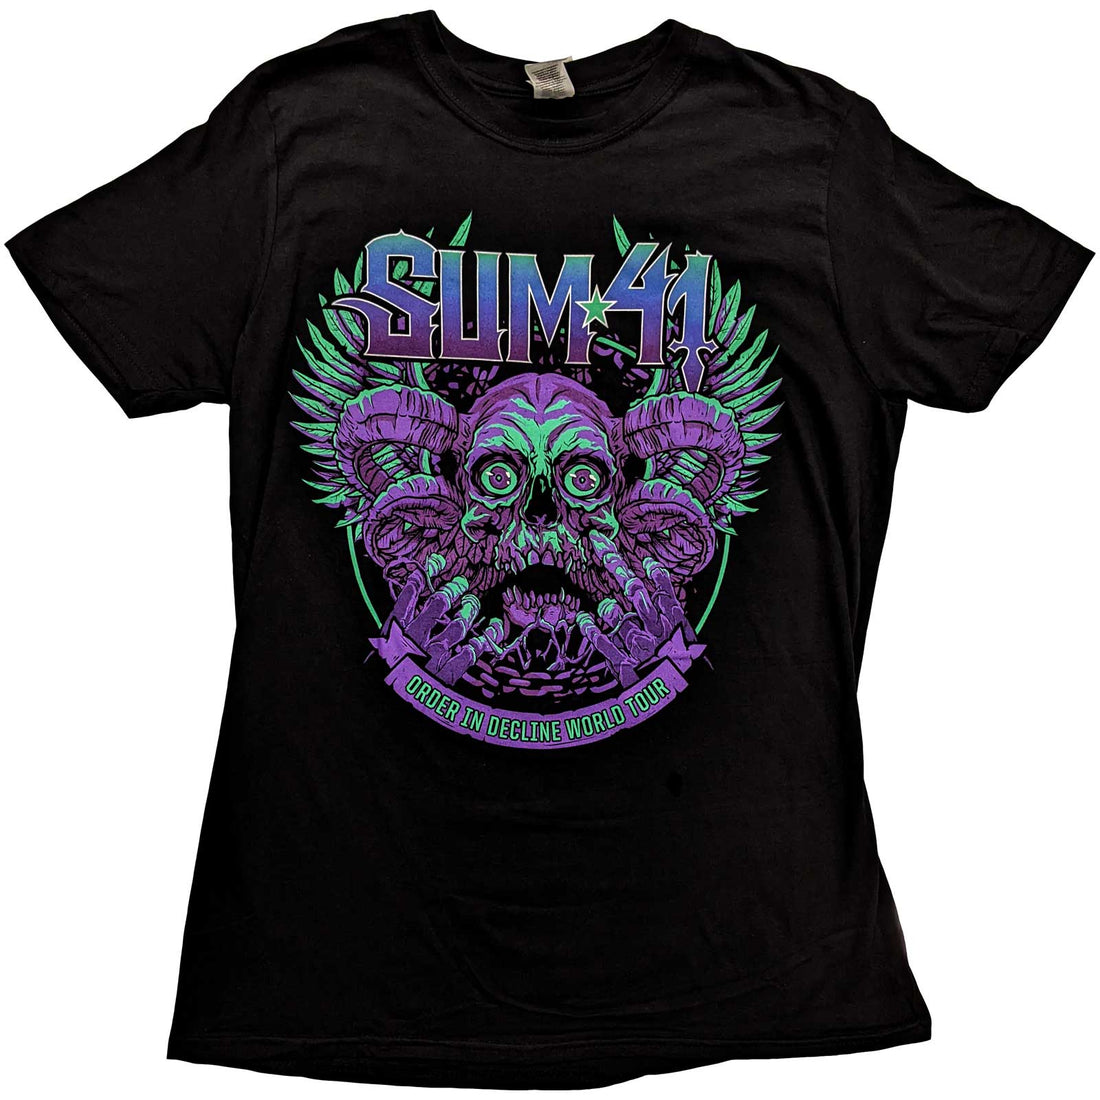 Sum 41 Unisex T-Shirt: Order In Decline Tour 2020 Purple Skull (Back Print) (Ex-Tour)